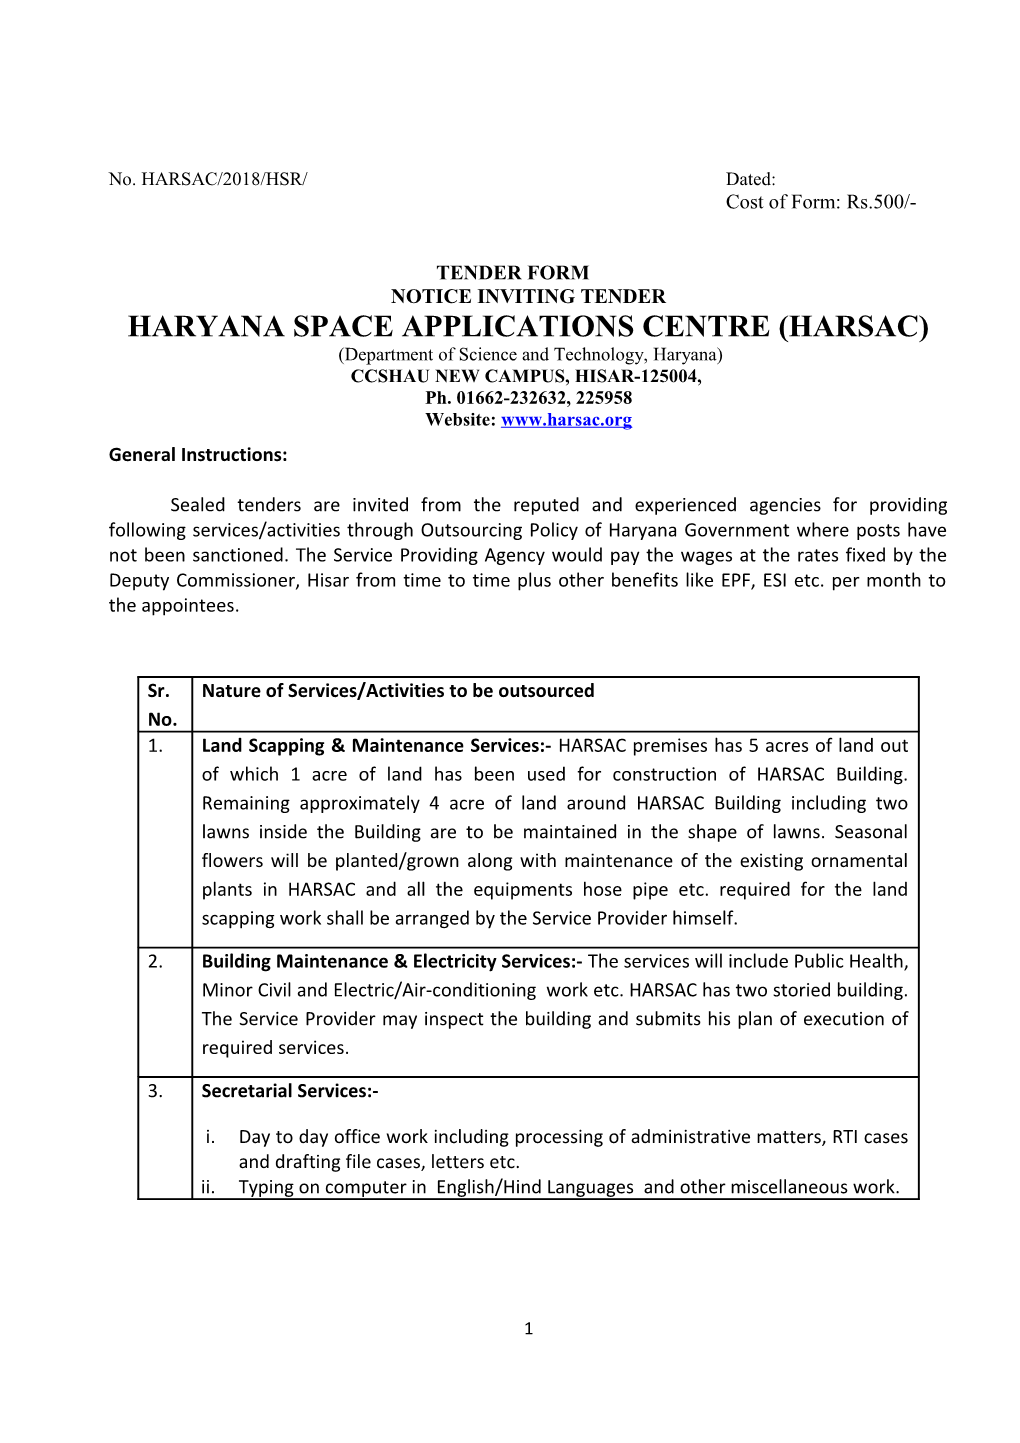 Haryana Space Applications Centre (Harsac)